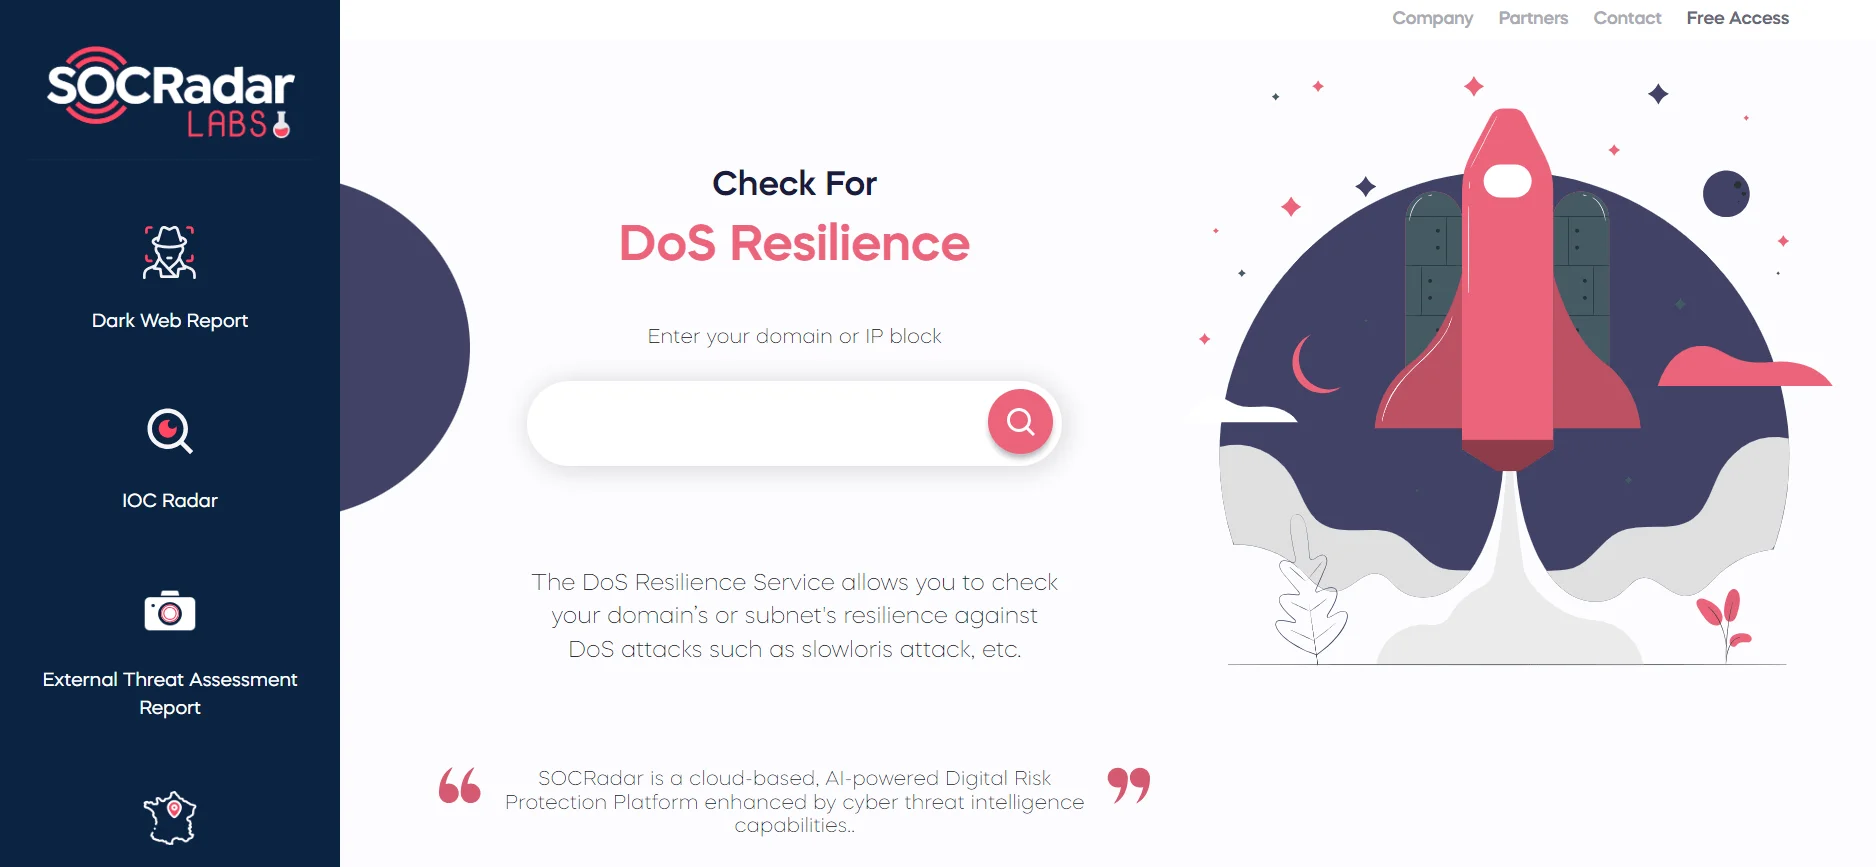 SOCRadar Labs has free DoS Resilience tool